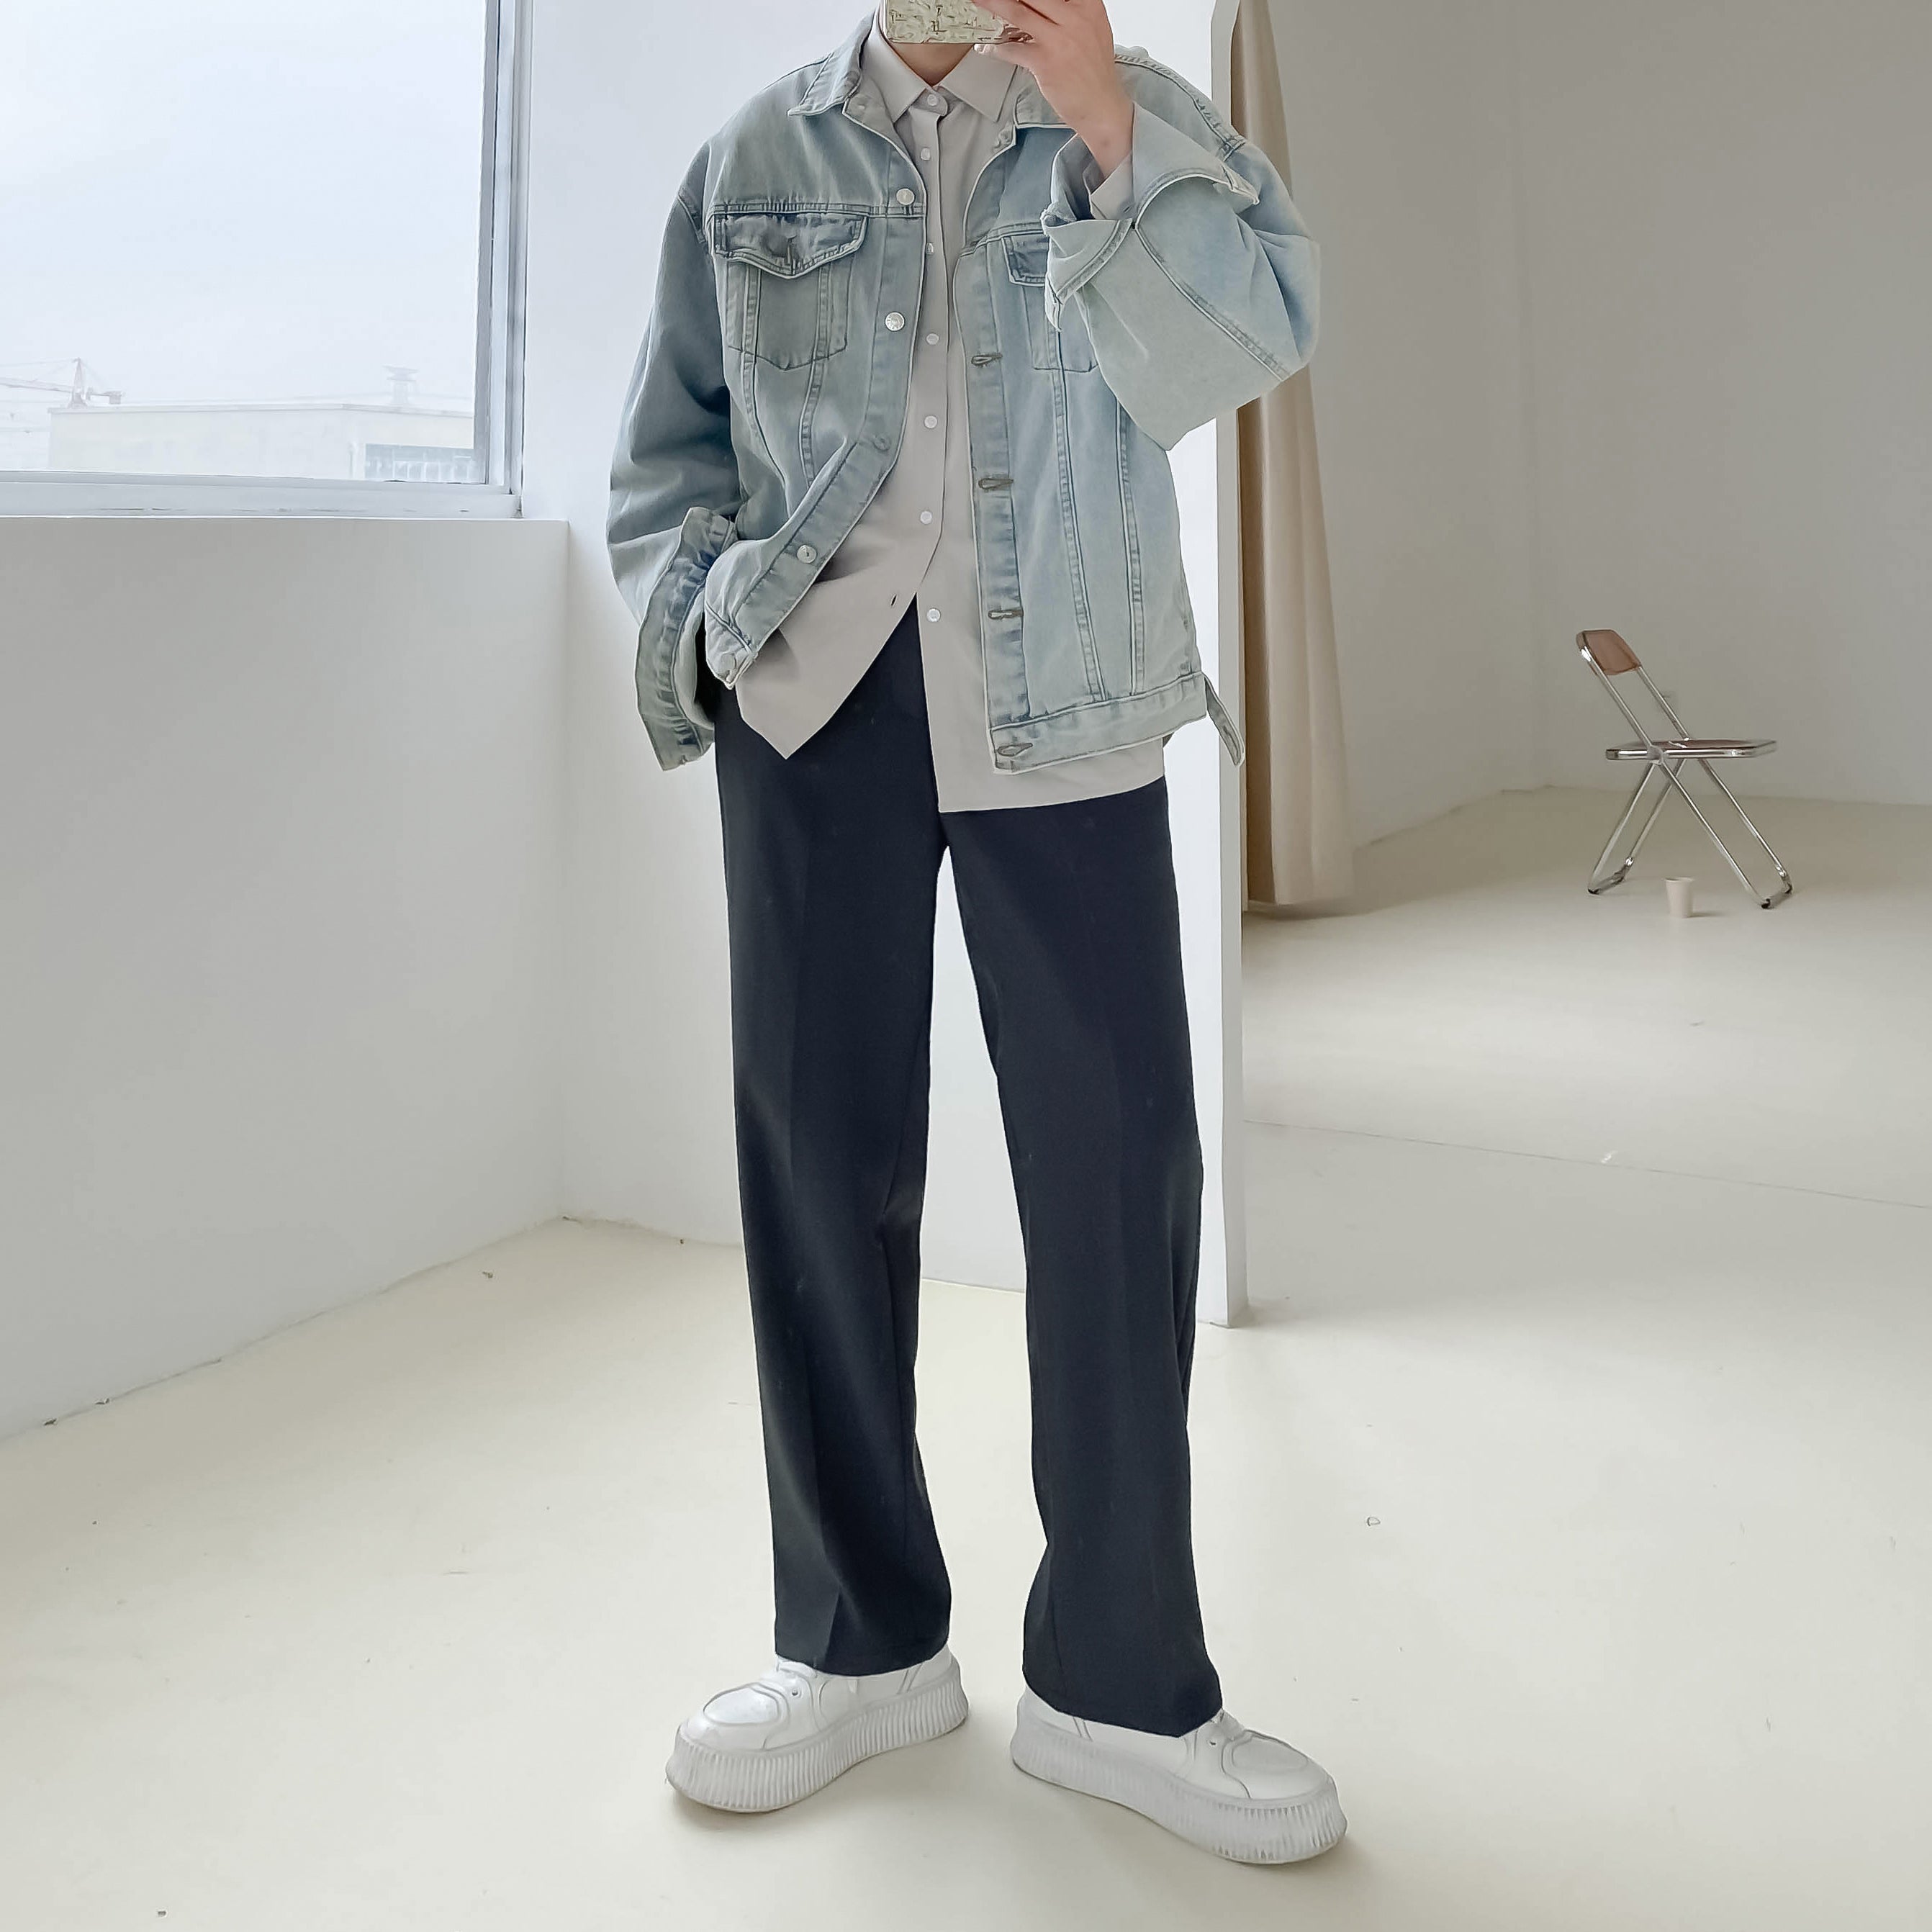 How To Wear Denim Jacket Like Korean Men in 20 Ways | Korean Men Style ...